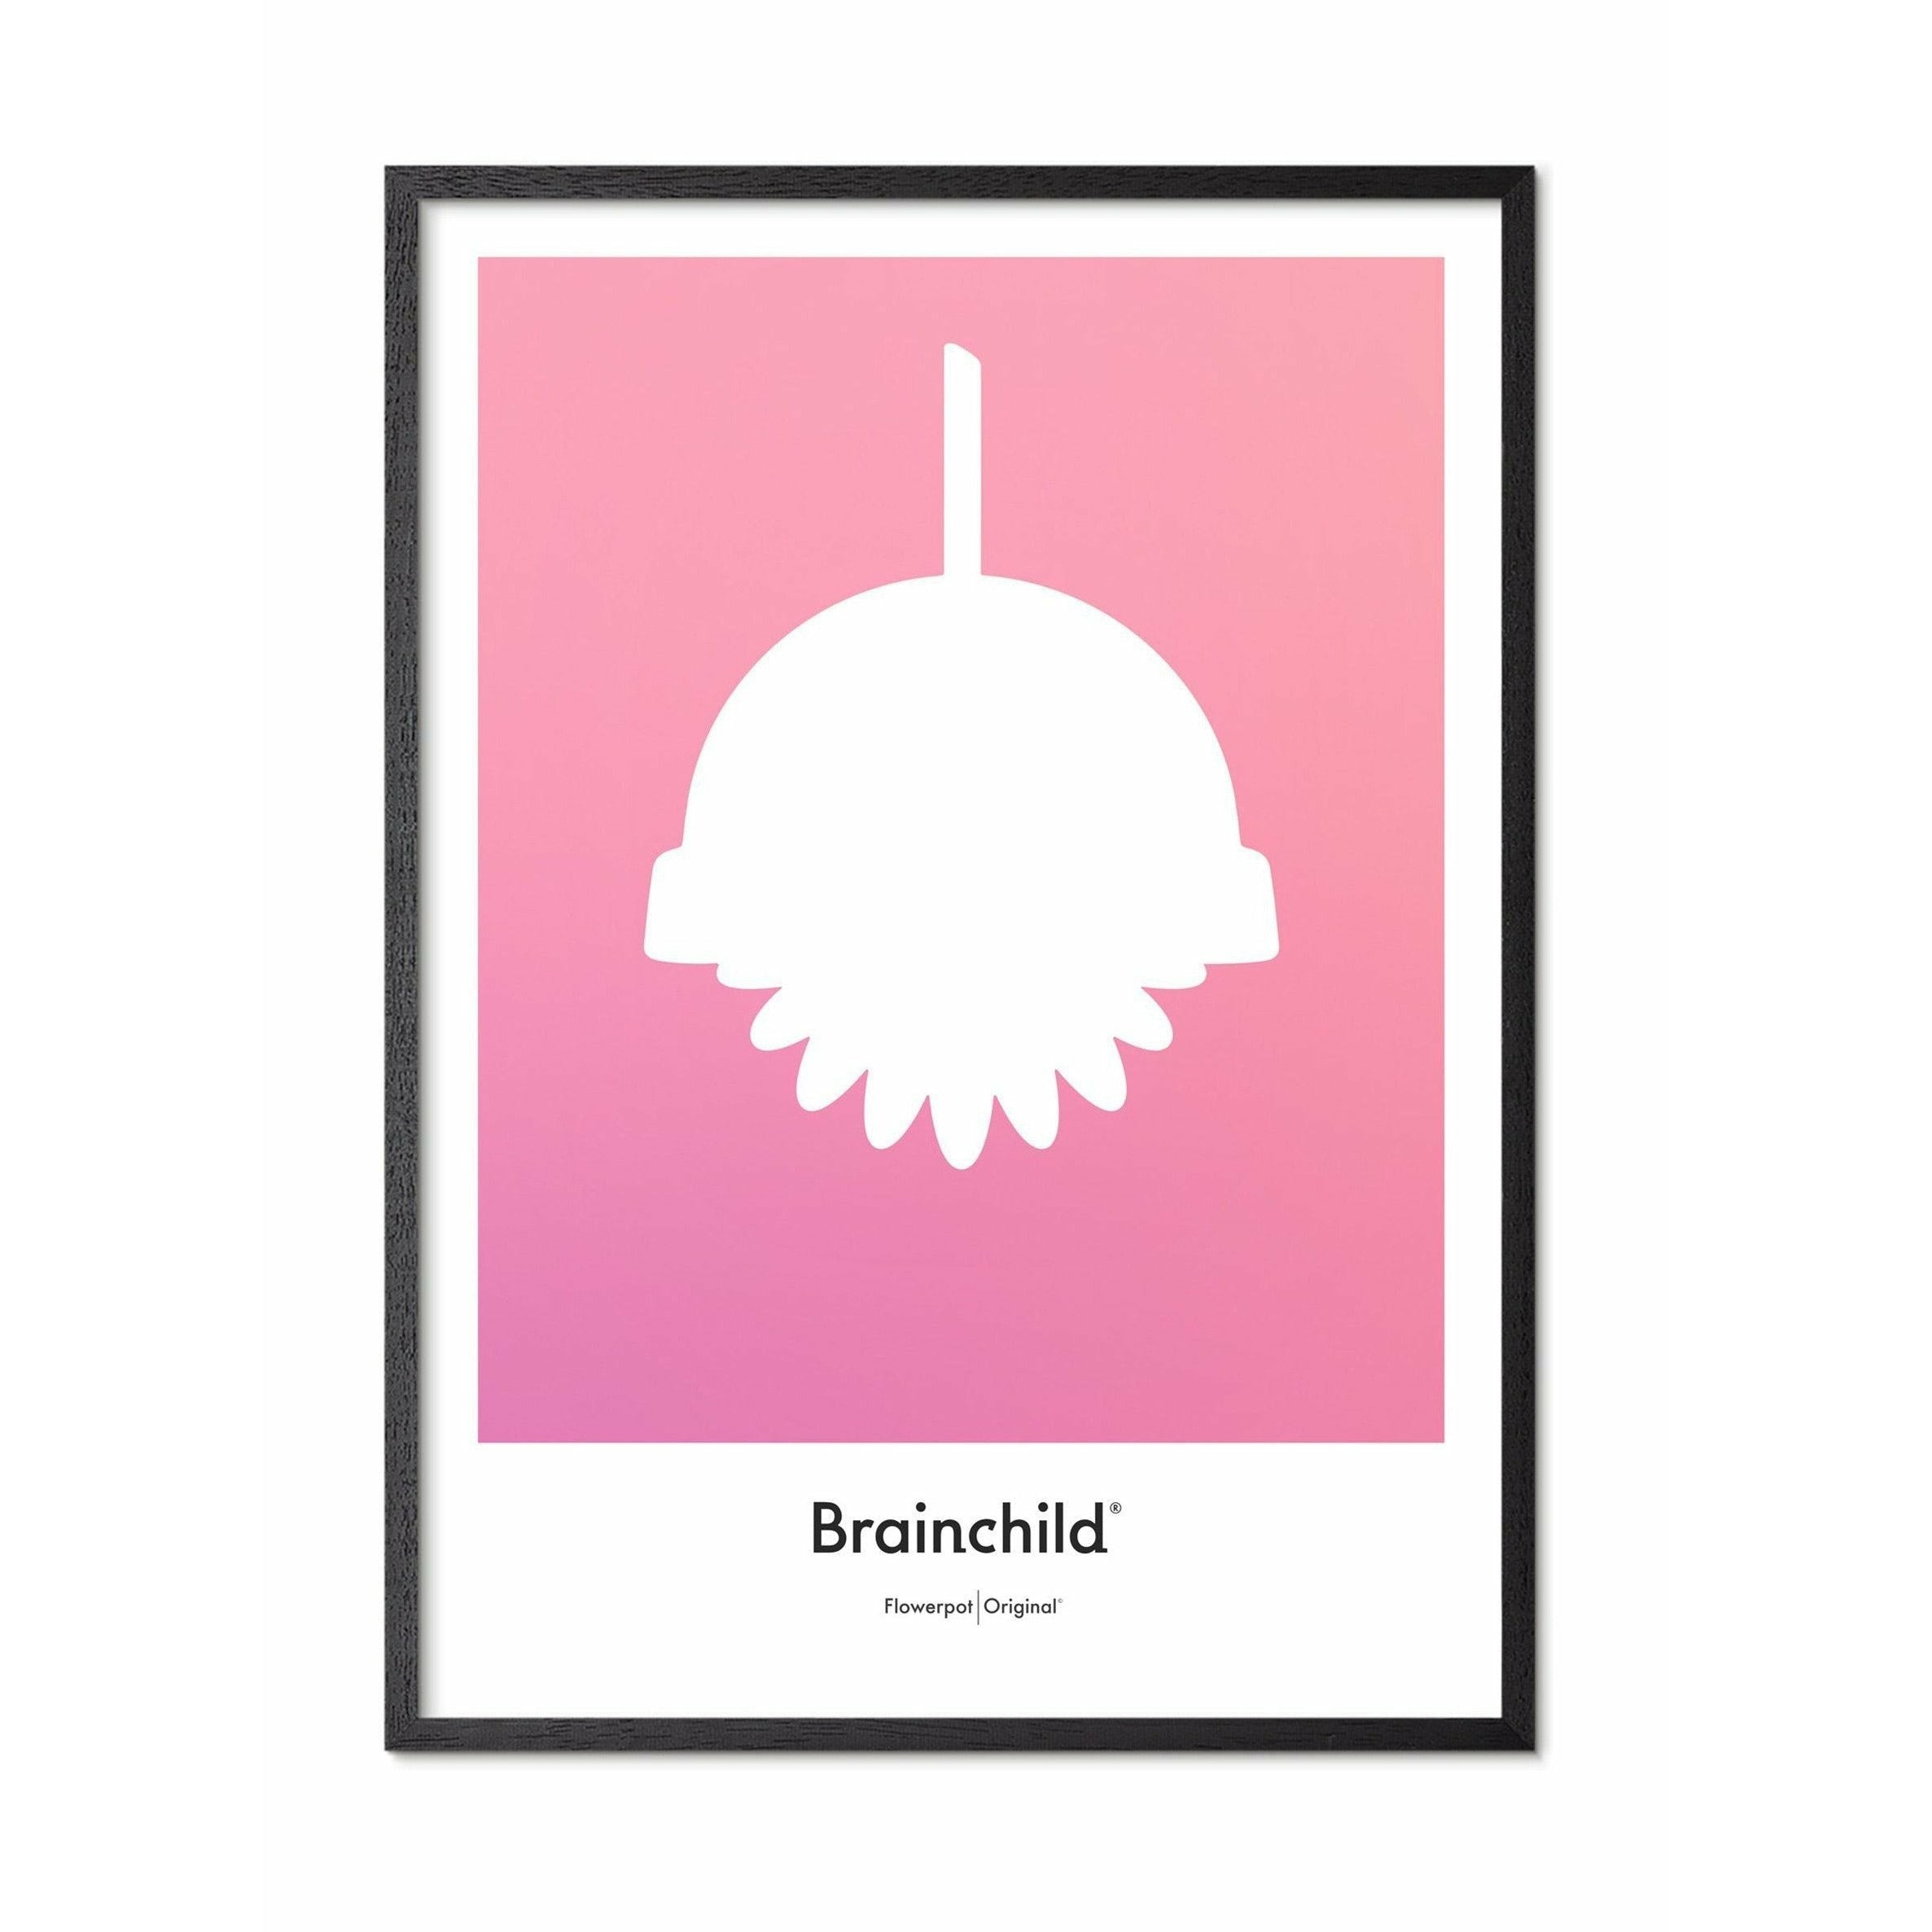 Brainchild Flowerpot Design Icon Poster, Frame In Black Lacquered Wood 50x70 Cm, Pink